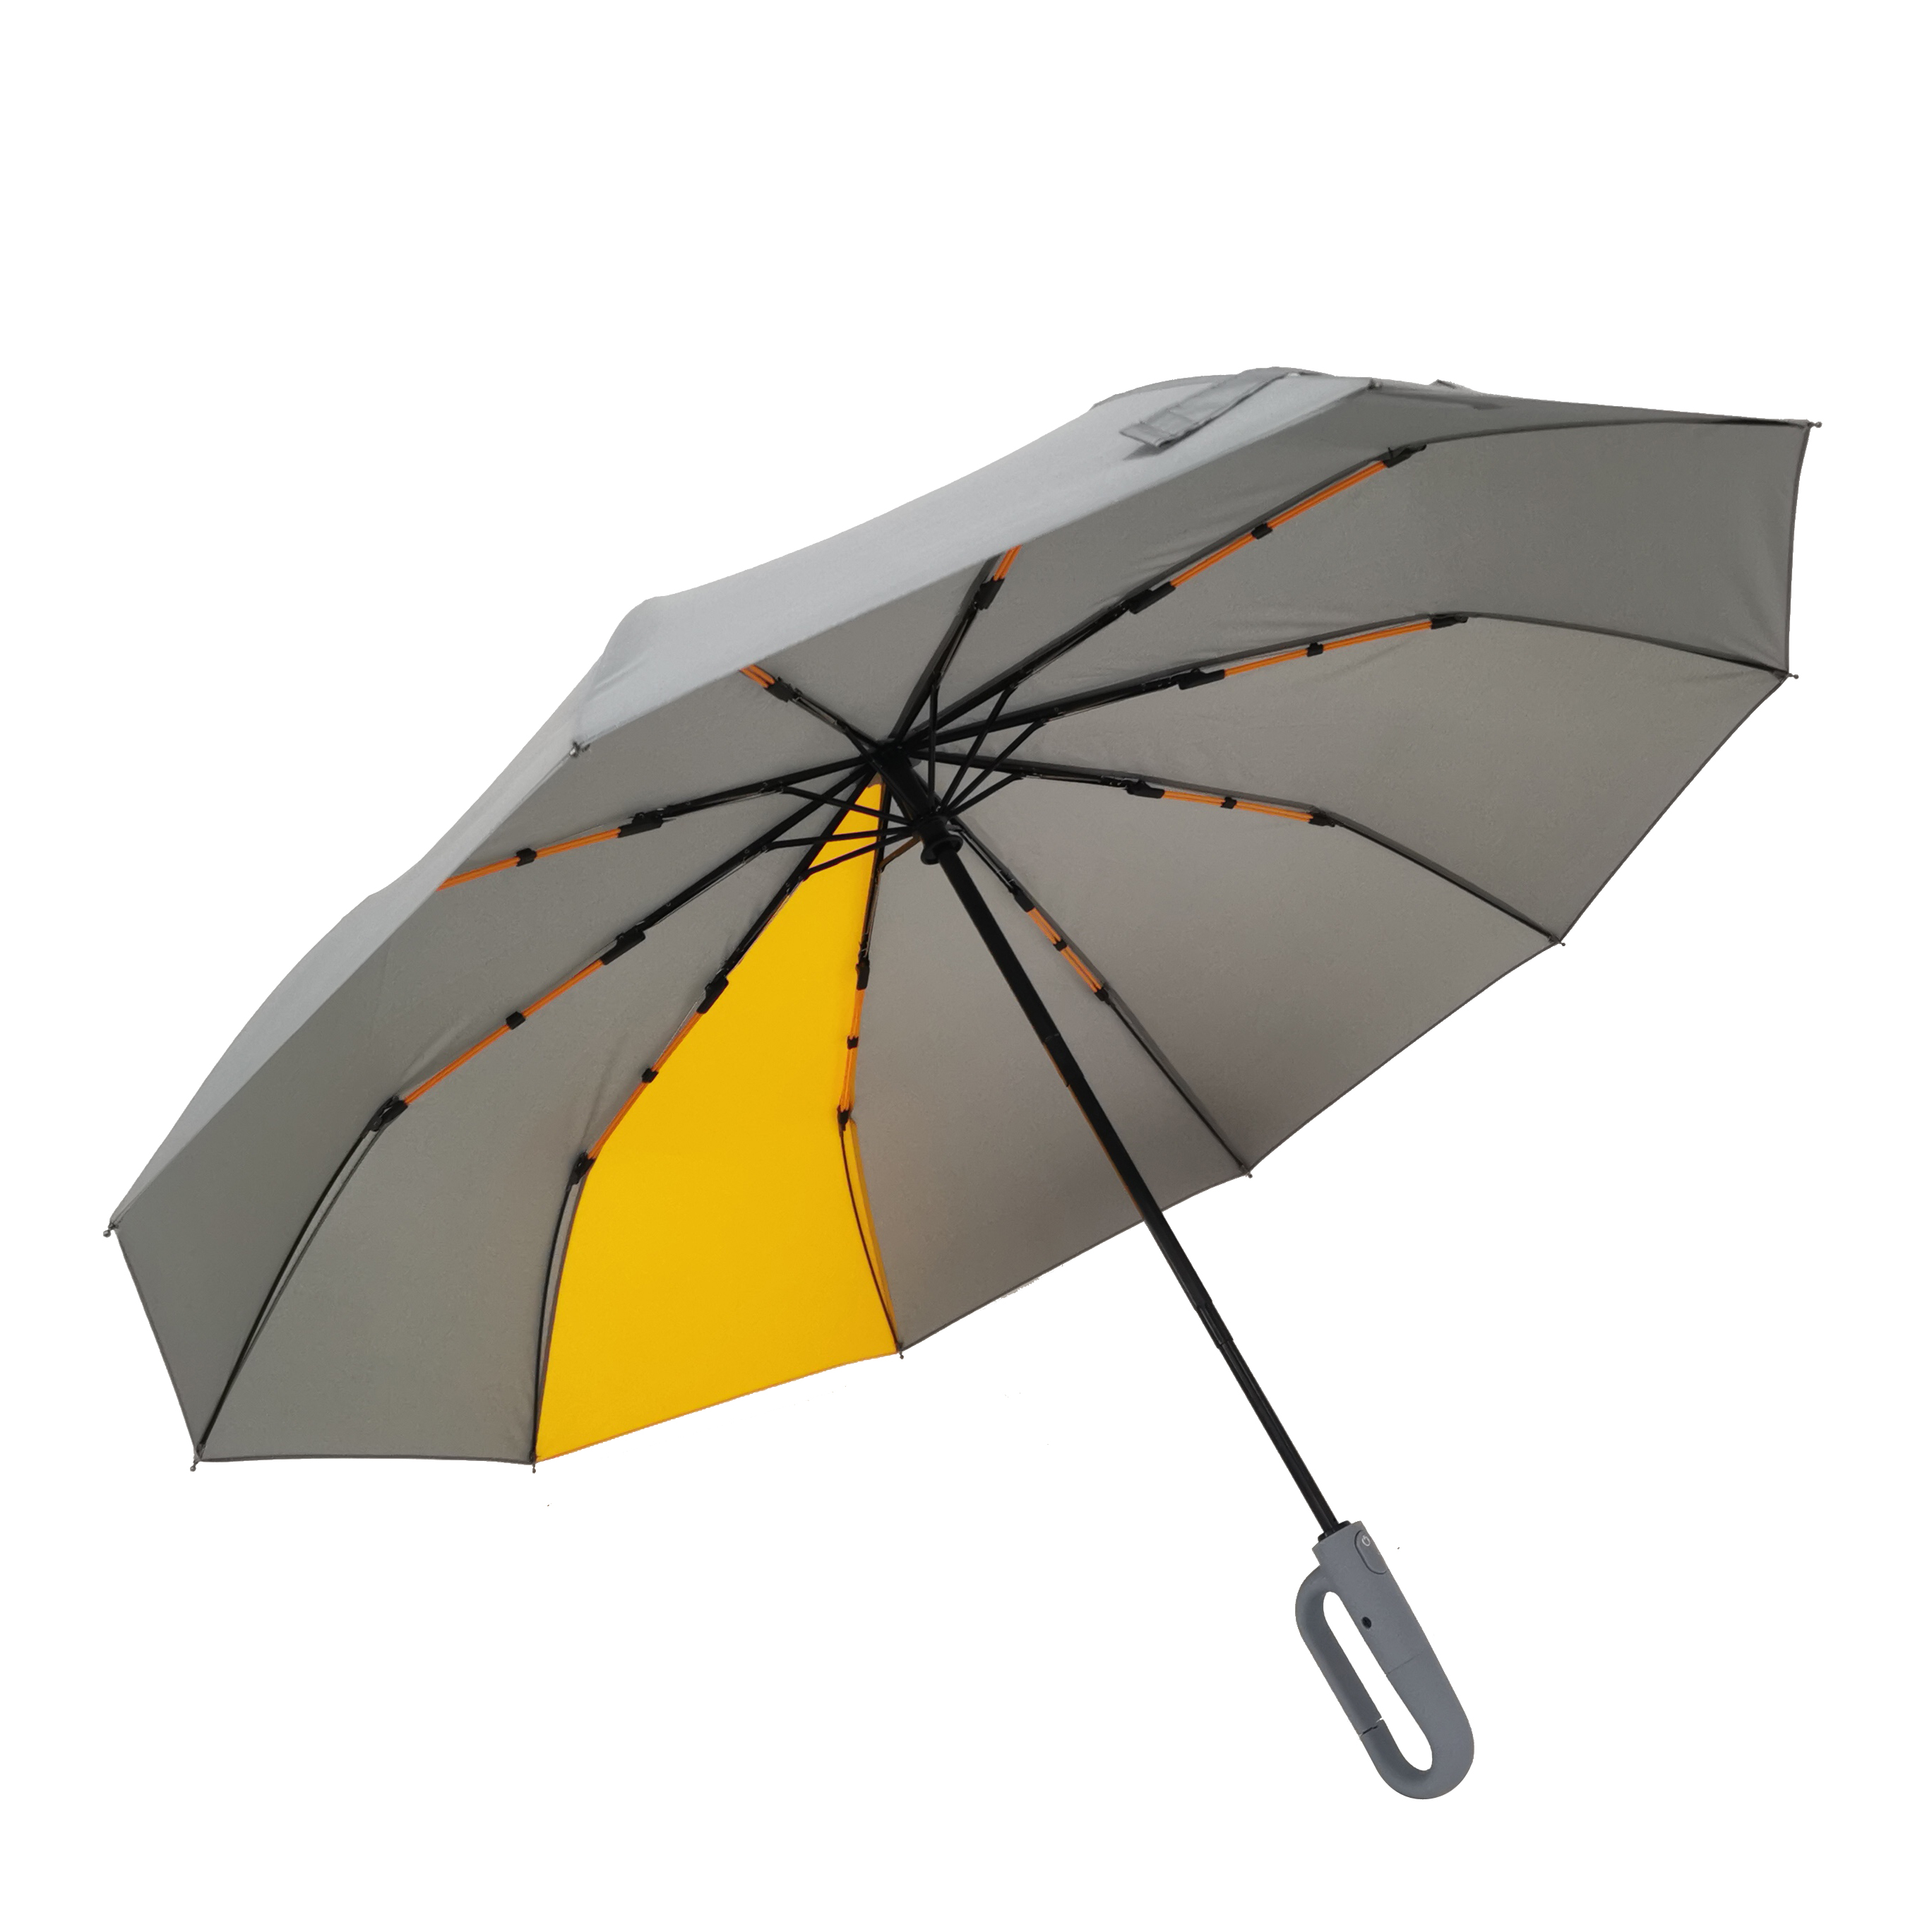 https://www.hodaumbrella.com/hook-up-lock-design-outdoor-sun-protection-easy-to-travel-buckle-dual-folding-umbrella-product/